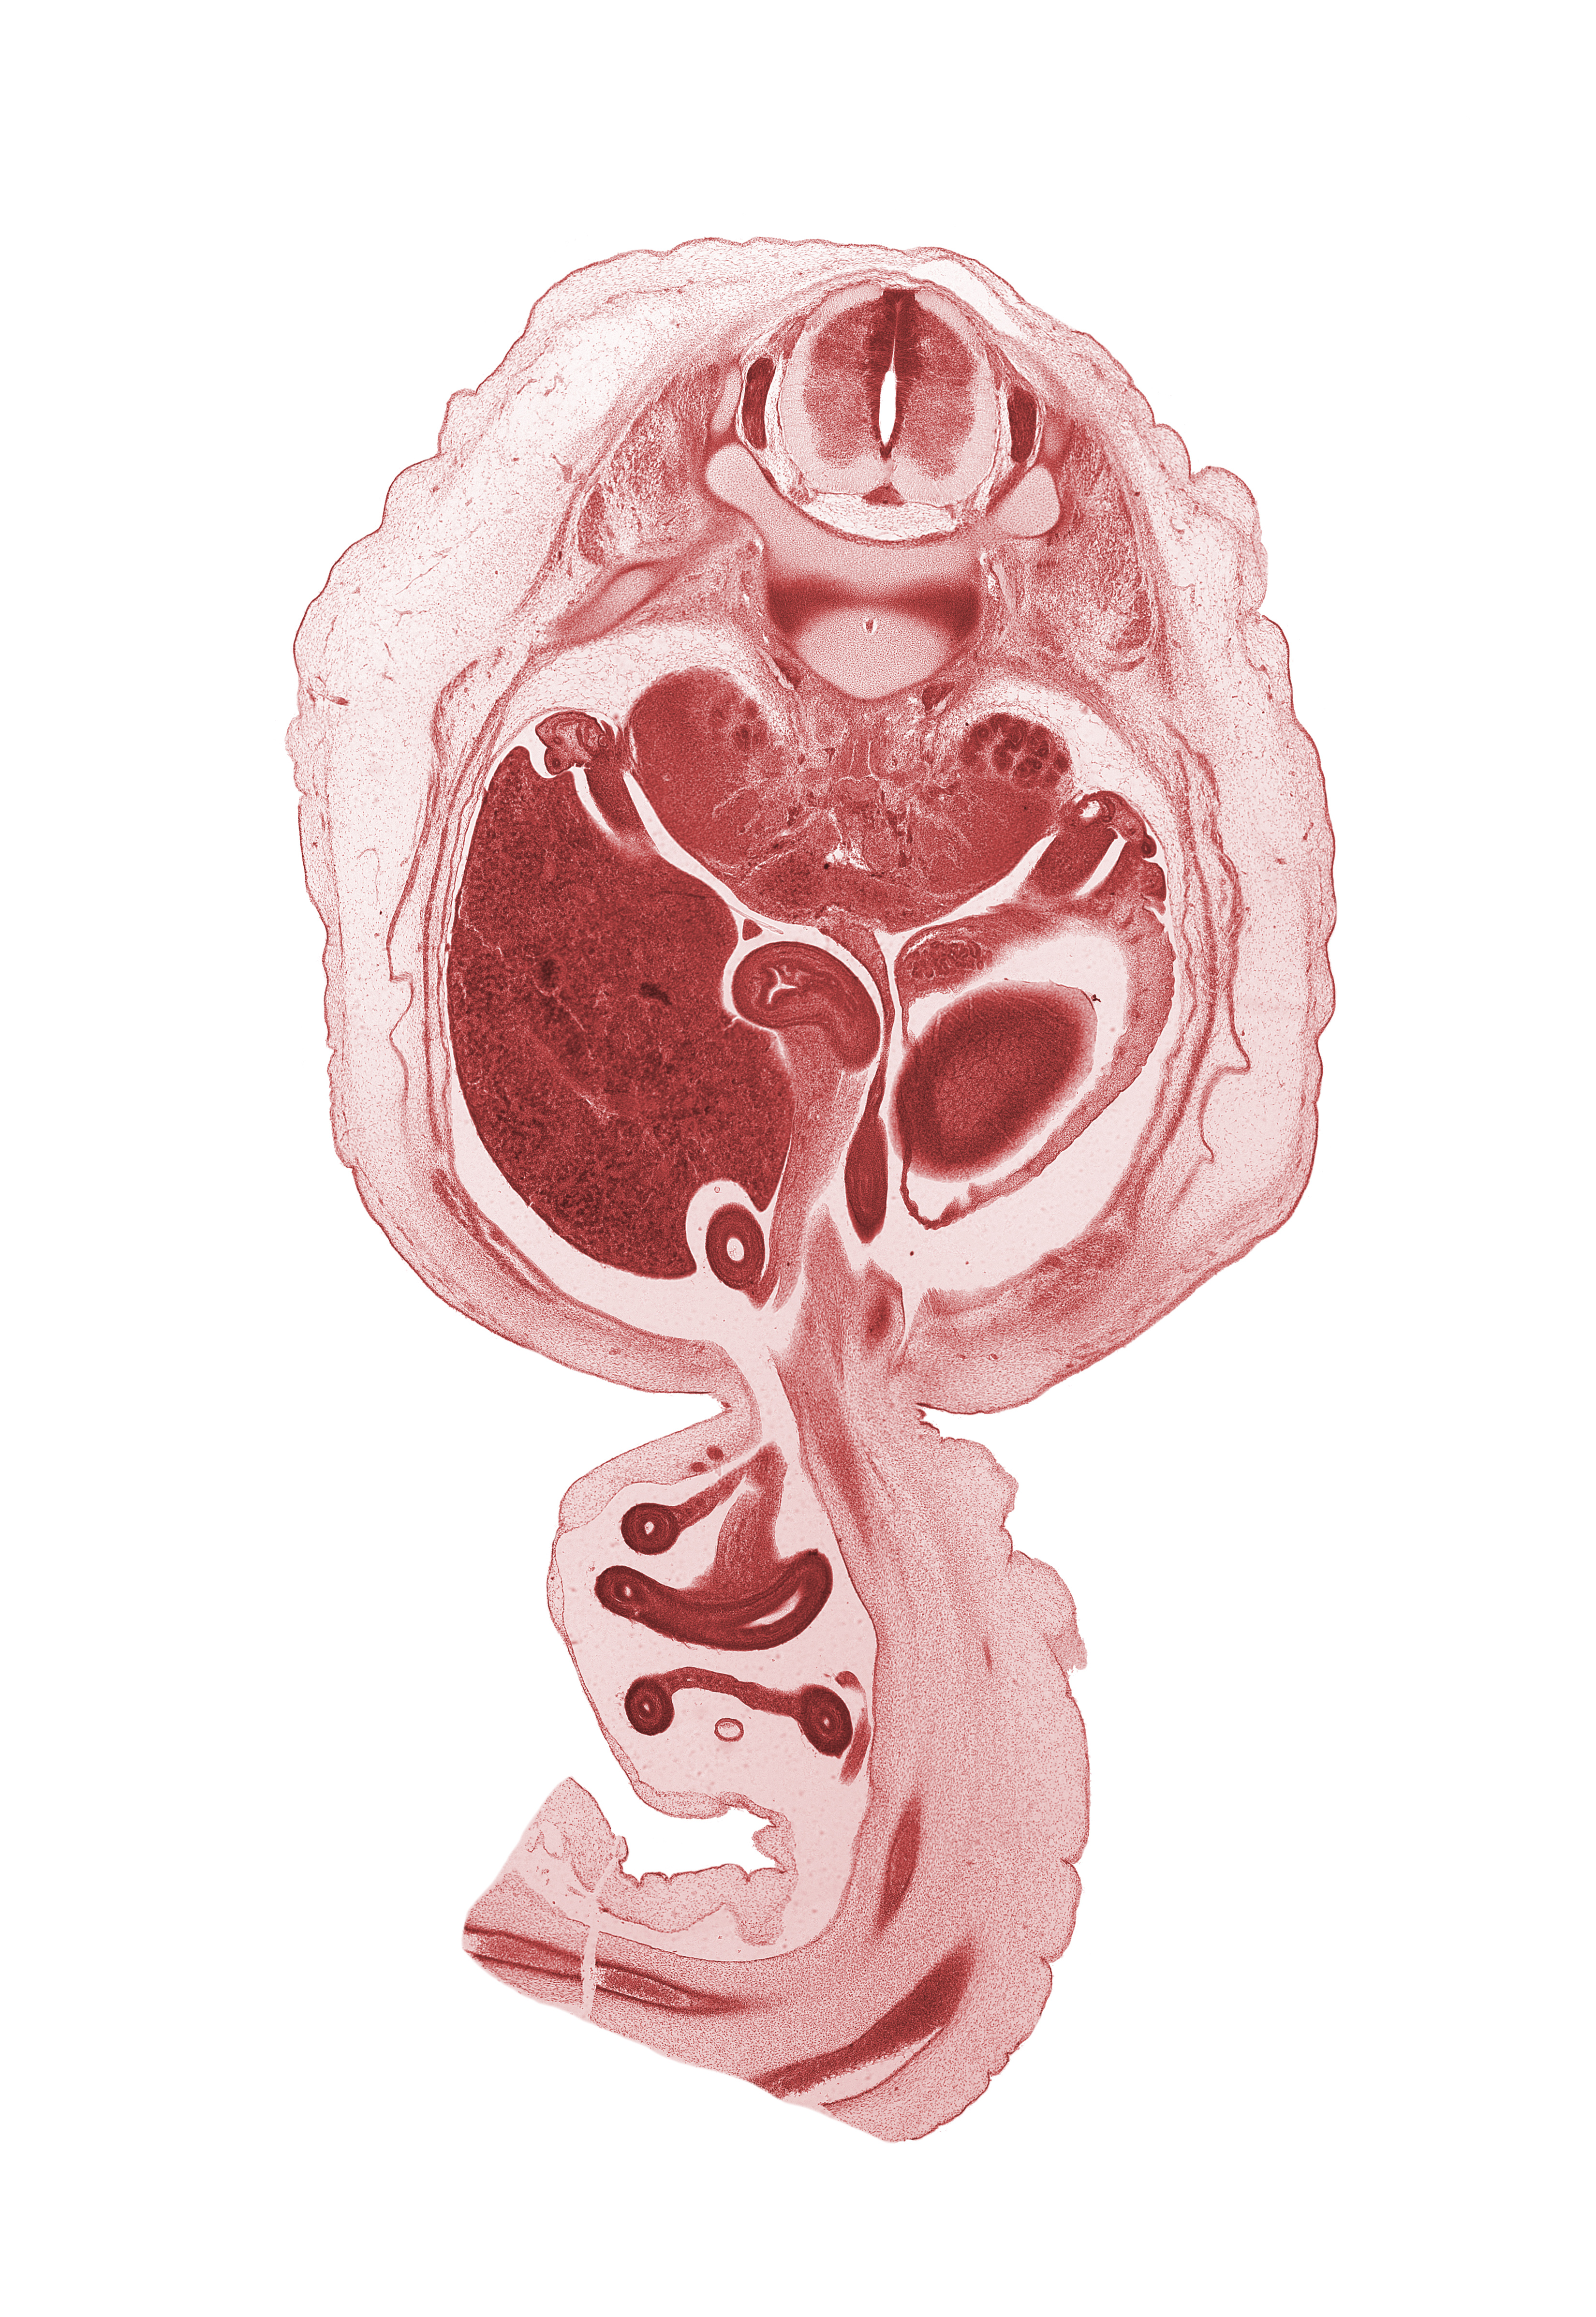 T-12 / L-1 intervertebral disc, T-12 spinal ganglion, T-12 spinal nerve, allantois, body of dorsal pancreas, centrum of L-1 vertebra, distal limb of herniated midgut, duodenum, external abdominal oblique muscle, hindgut (colon), internal abdominal oblique muscle, jejunum, left umbilical artery, mesentery, muscularis of stomach, omphalomesenteric artery, proximal limb of herniated midgut, rectus abdominis muscle, right umbilical artery, subcostal nerve (T-12 ventral primary ramus), superior pole of left kidney (metanephros), transversus abdominis muscle, umbilical vein, vas deferens (mesonephric duct)